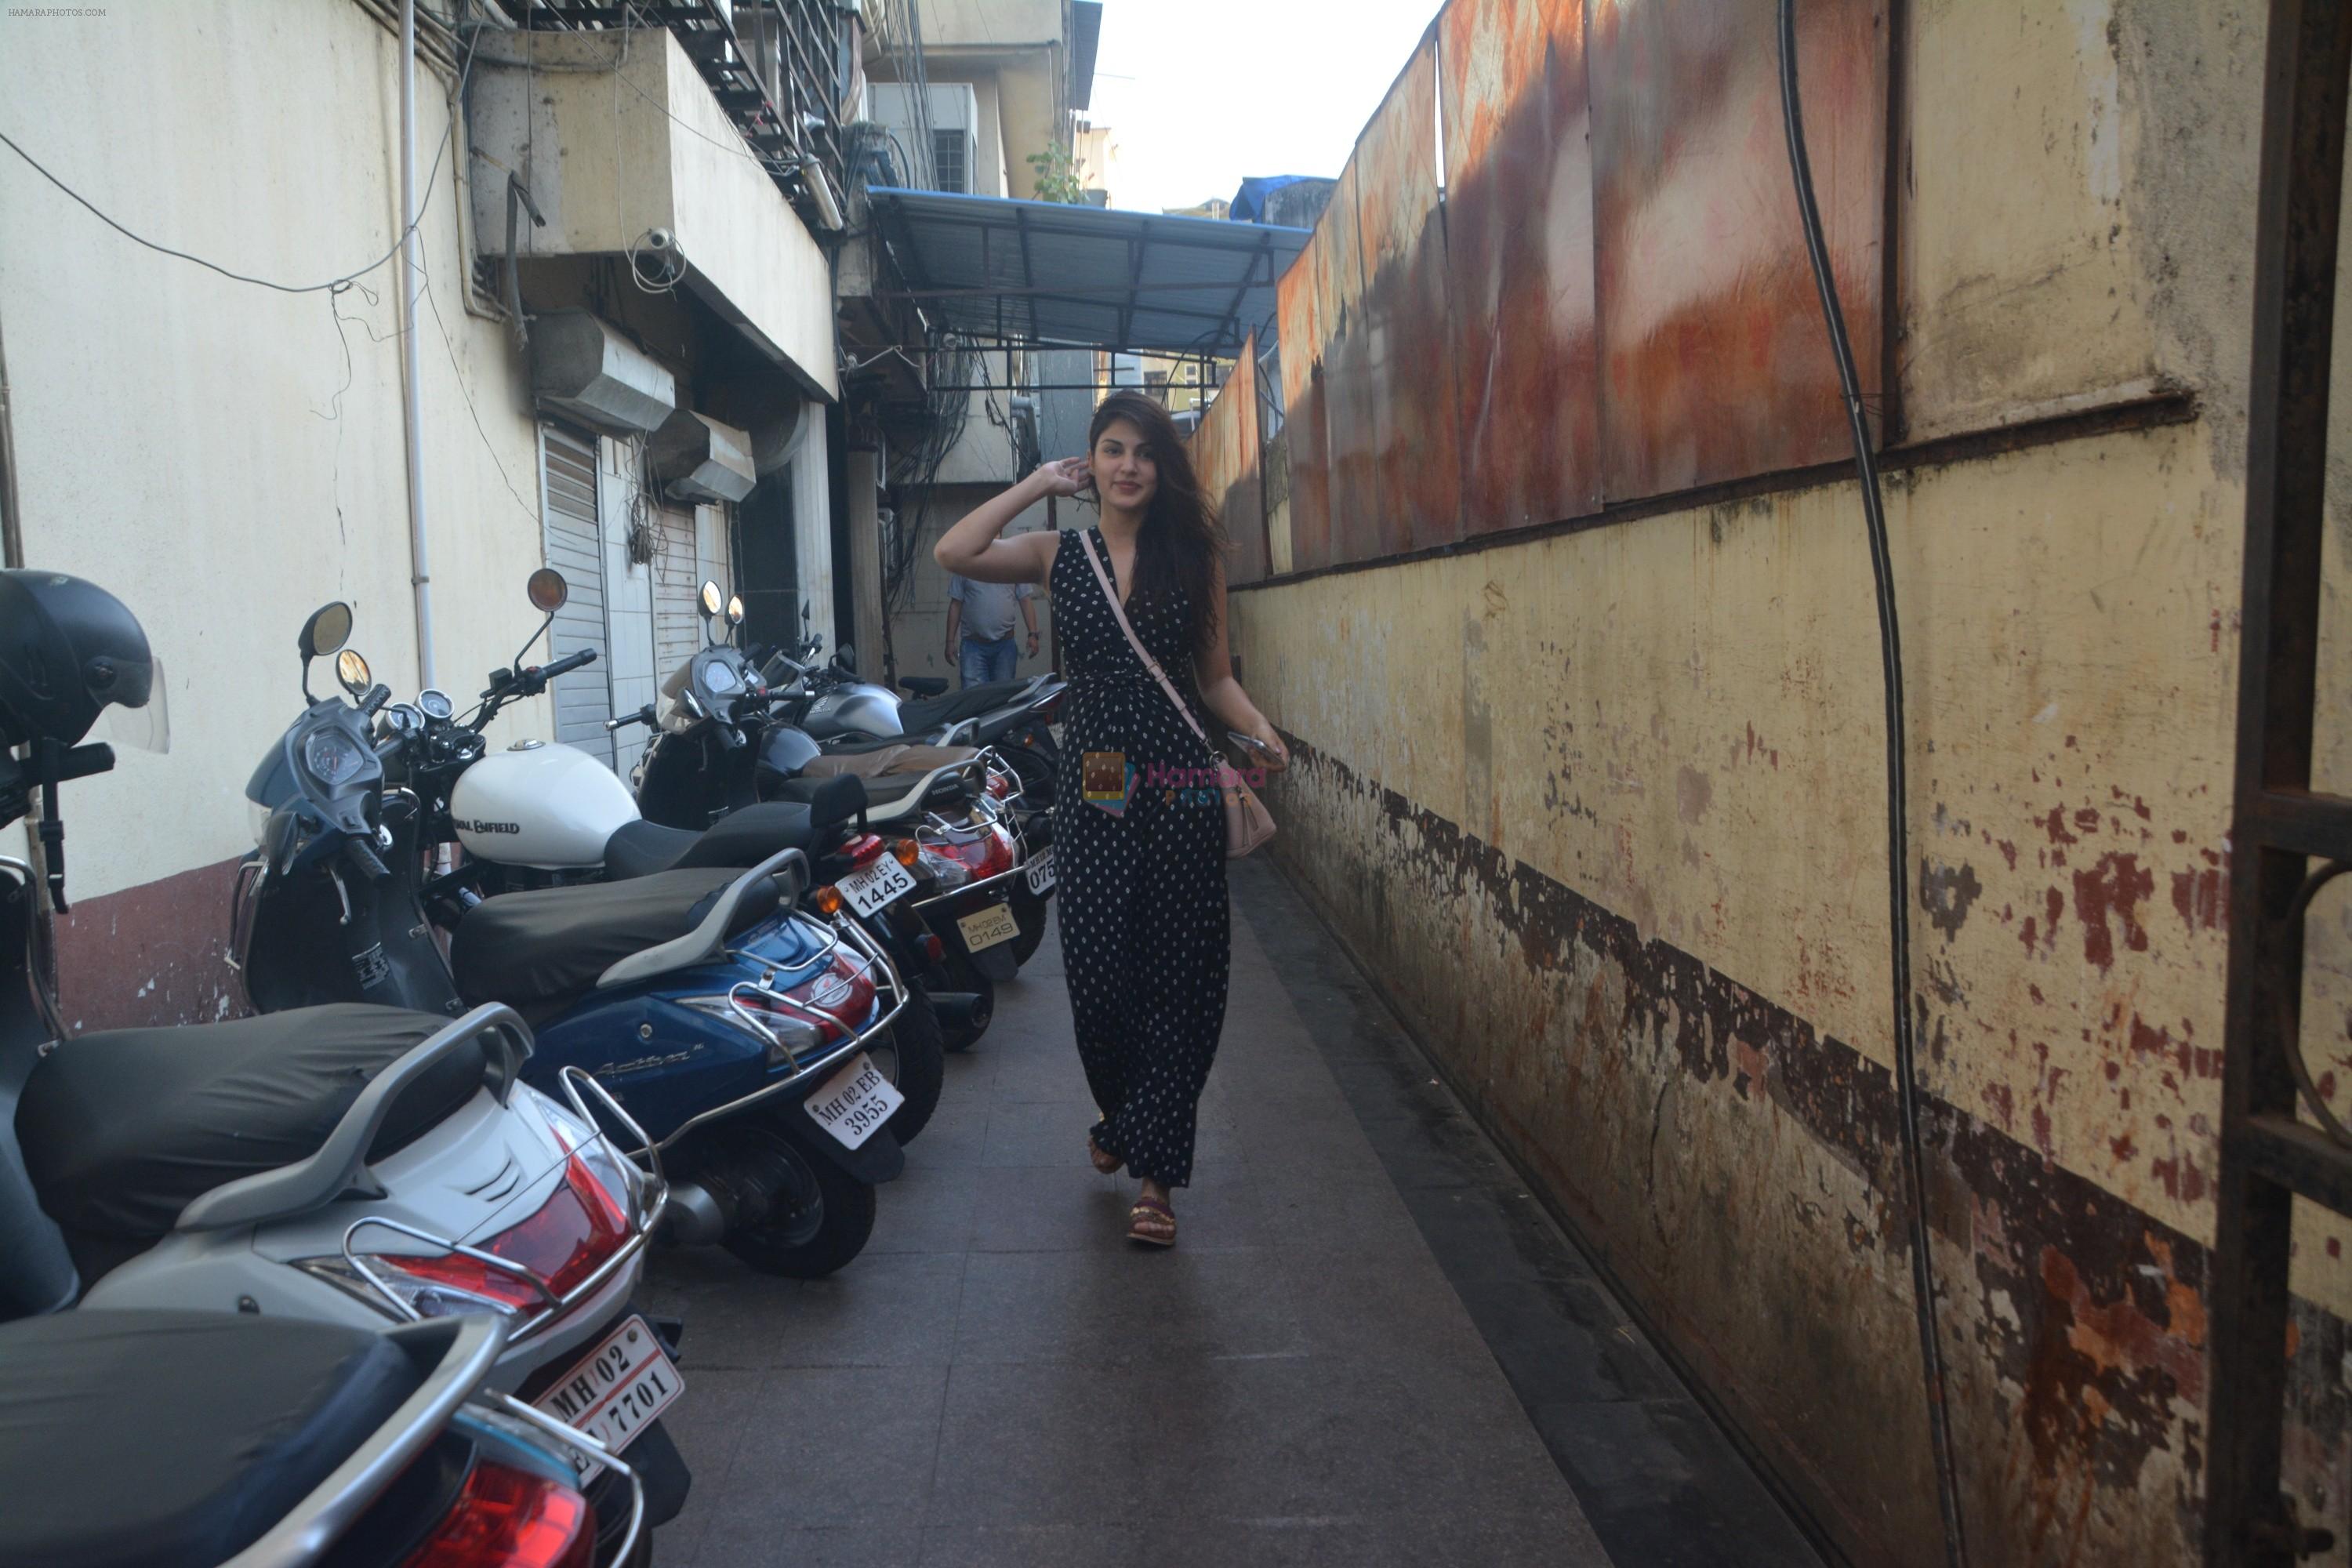 Rhea Chakraborty spotted at bandra on 23rd Oct 2018